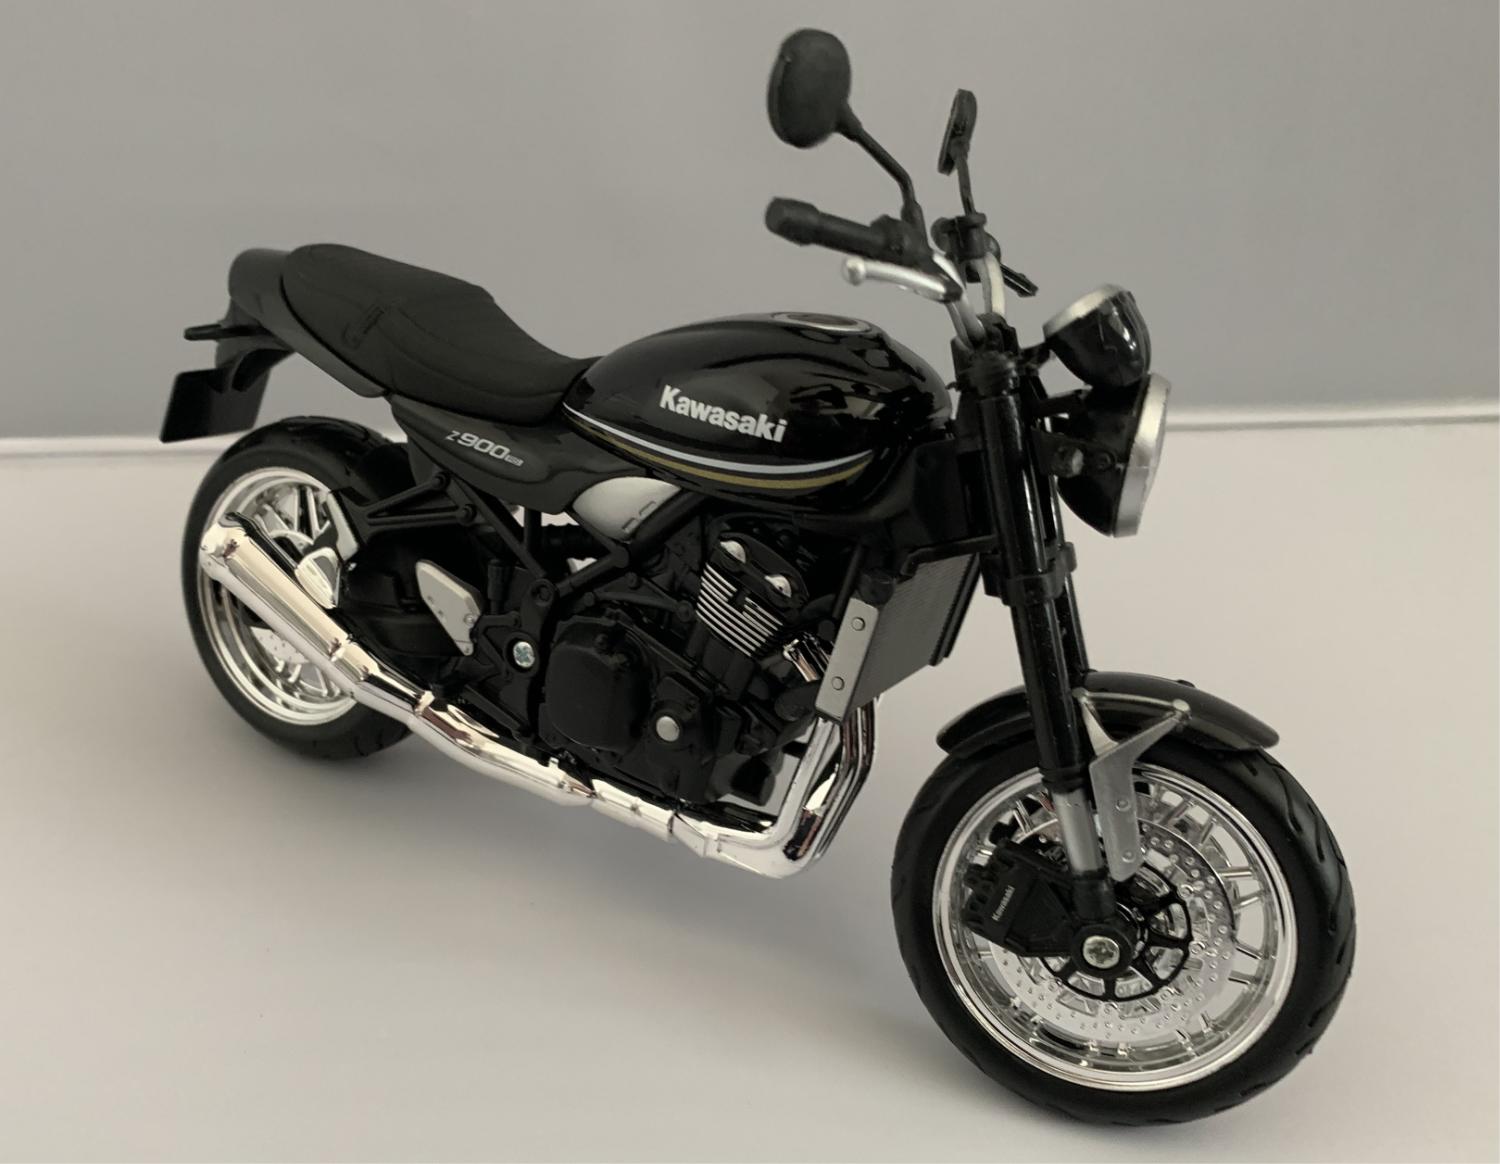 Kawasaki Z900RS in black 1:12 scale model from Maisto